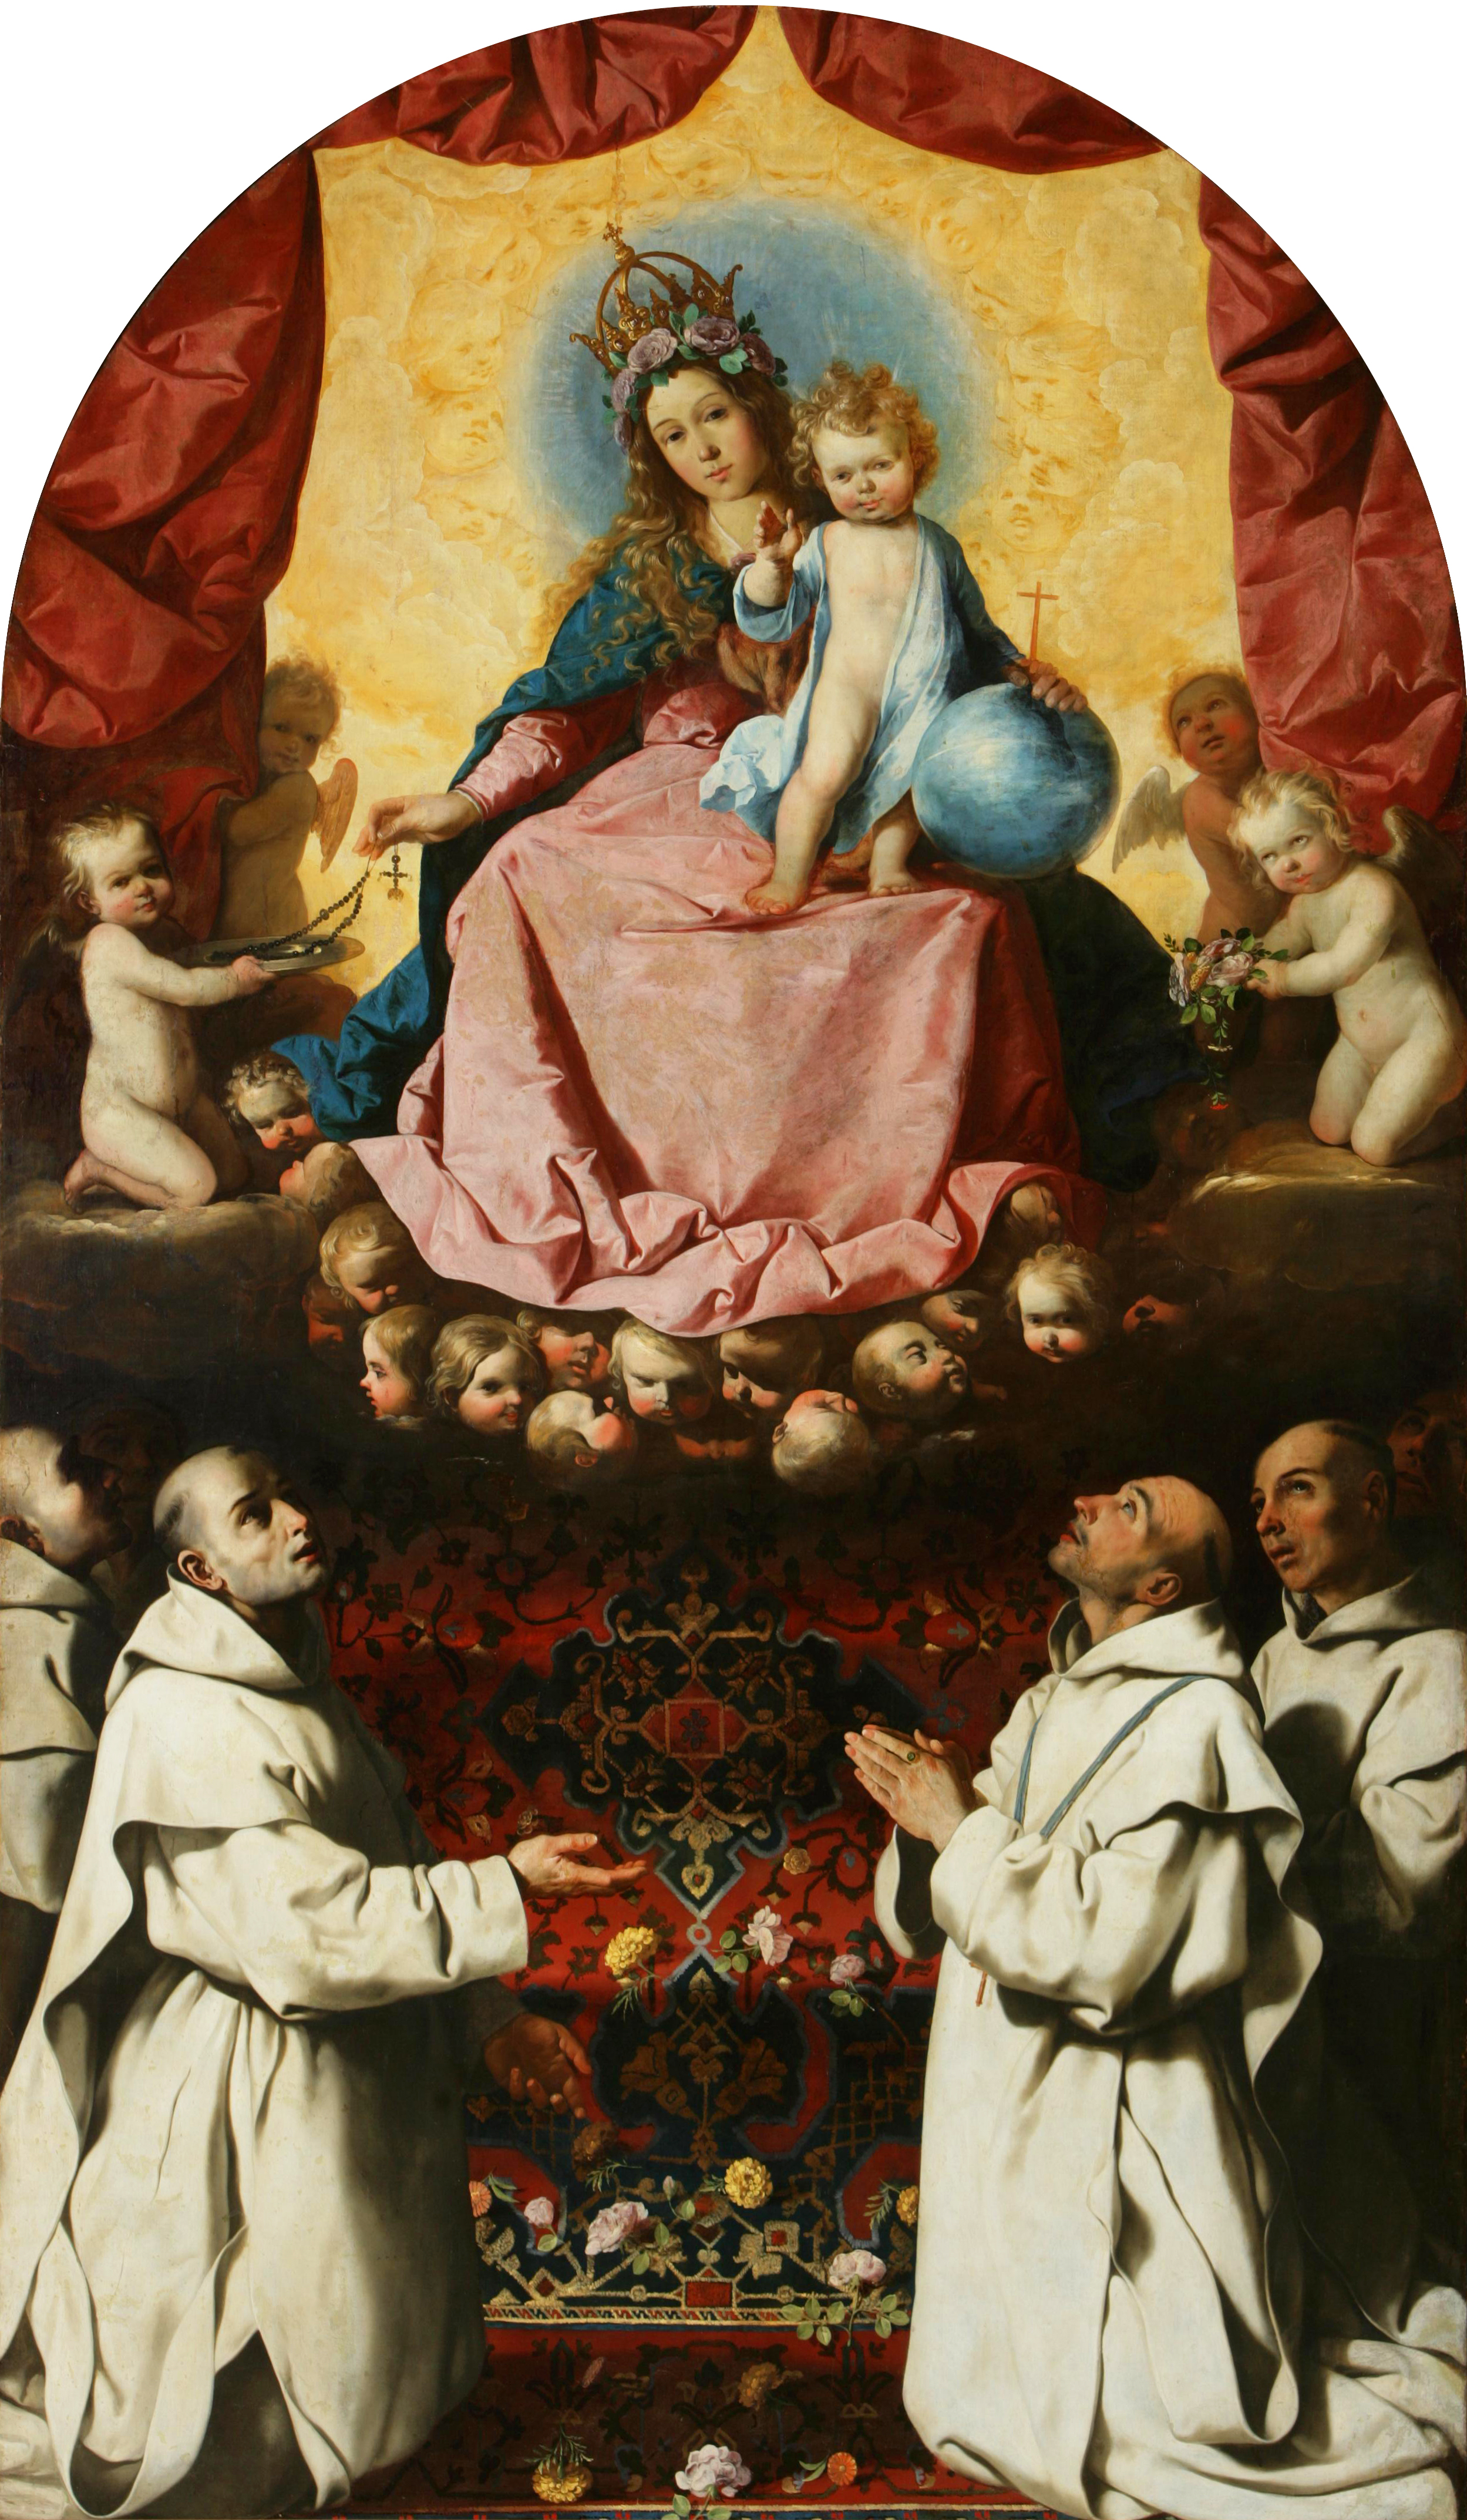 https://upload.wikimedia.org/wikipedia/commons/a/ad/Zurbaran_Virgin_of_the_Rosary.jpg